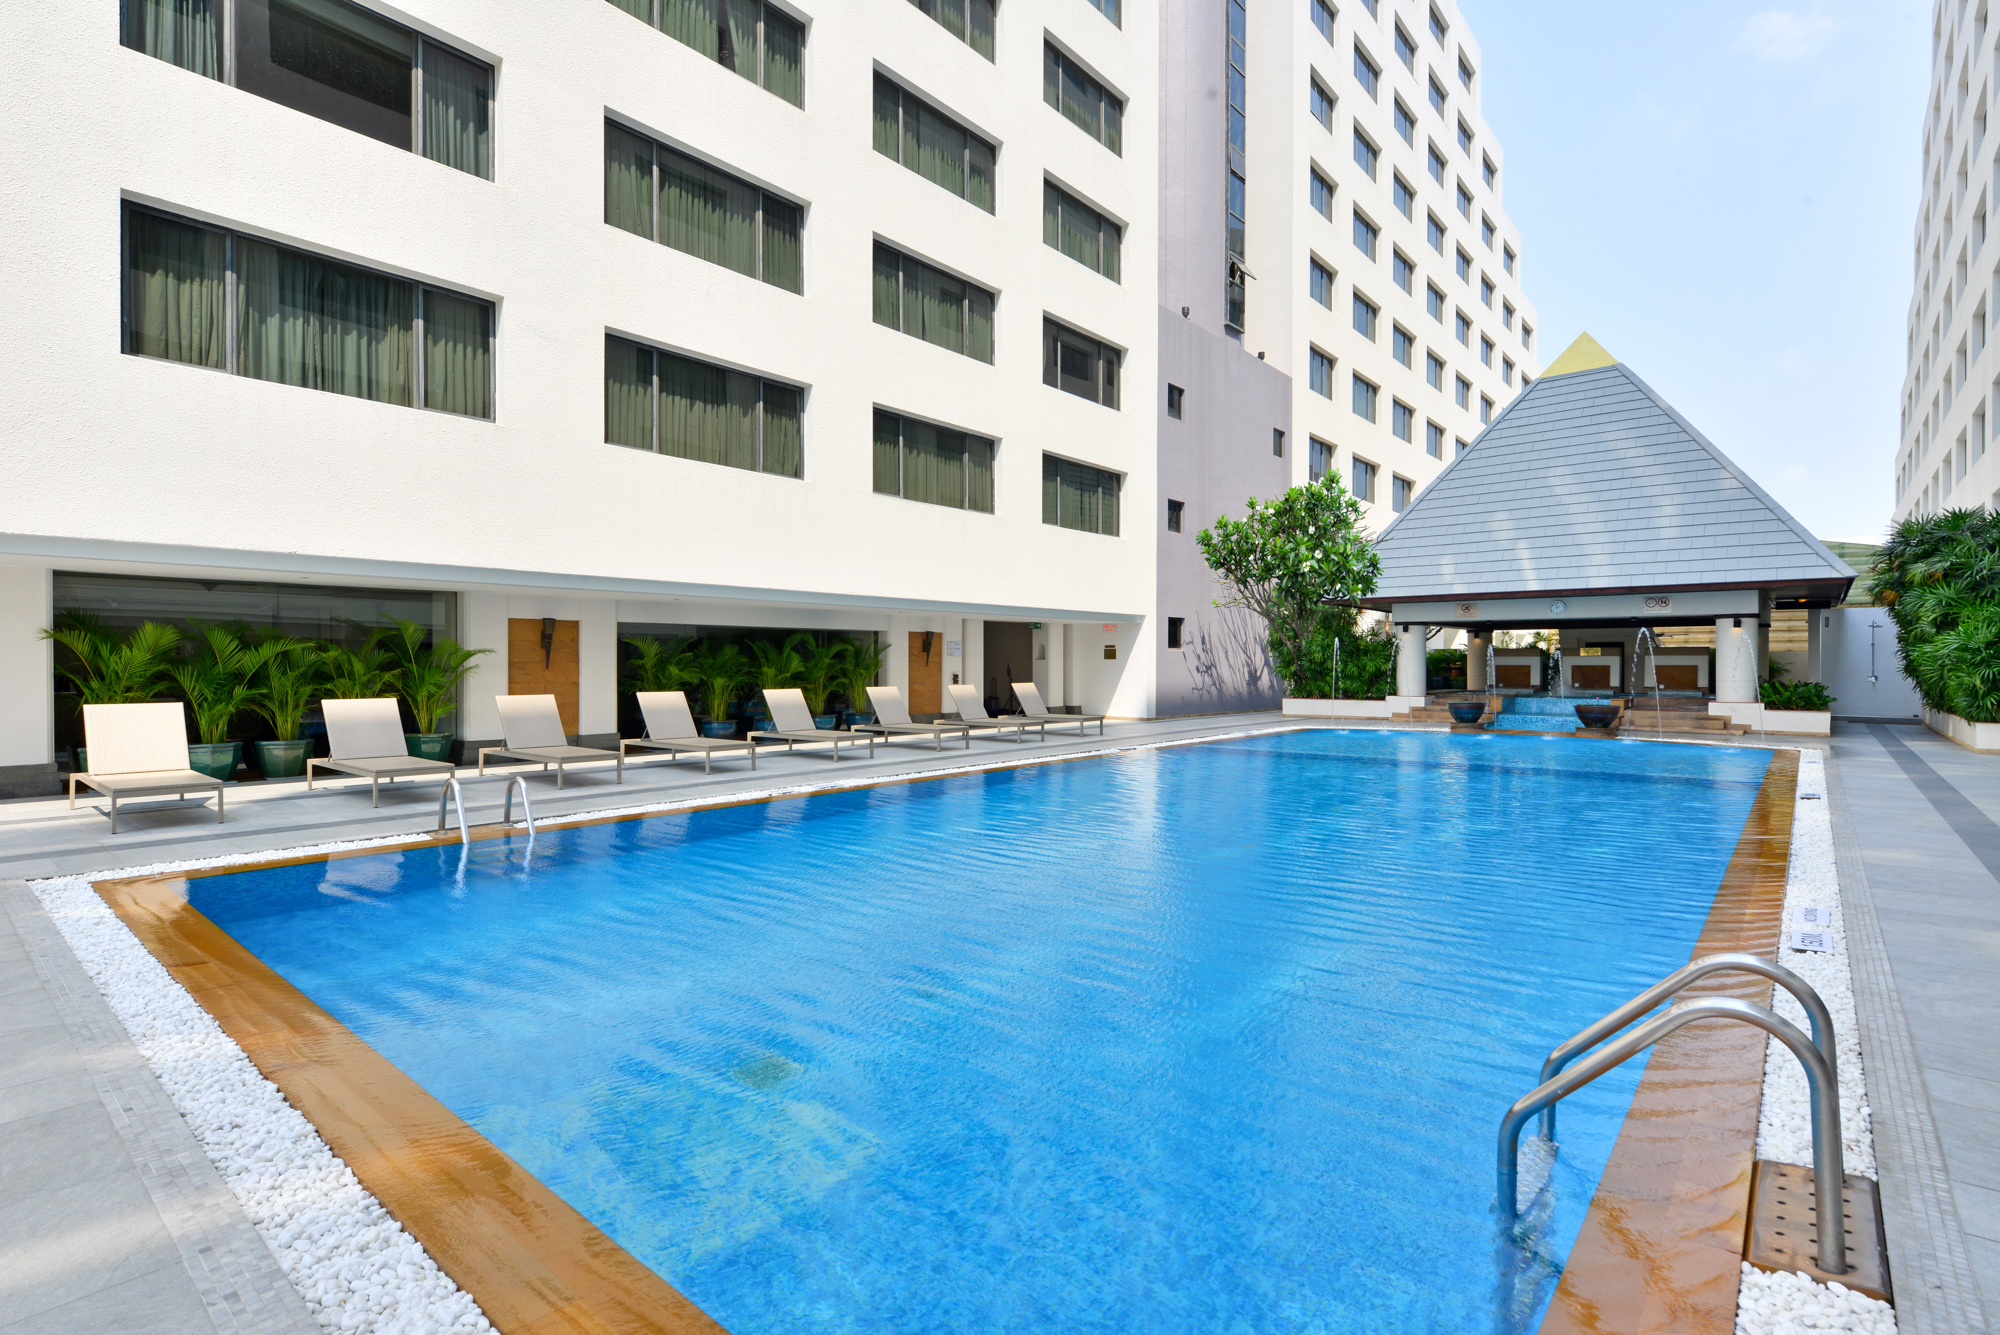 The Twin Towers Hotel Bangkok